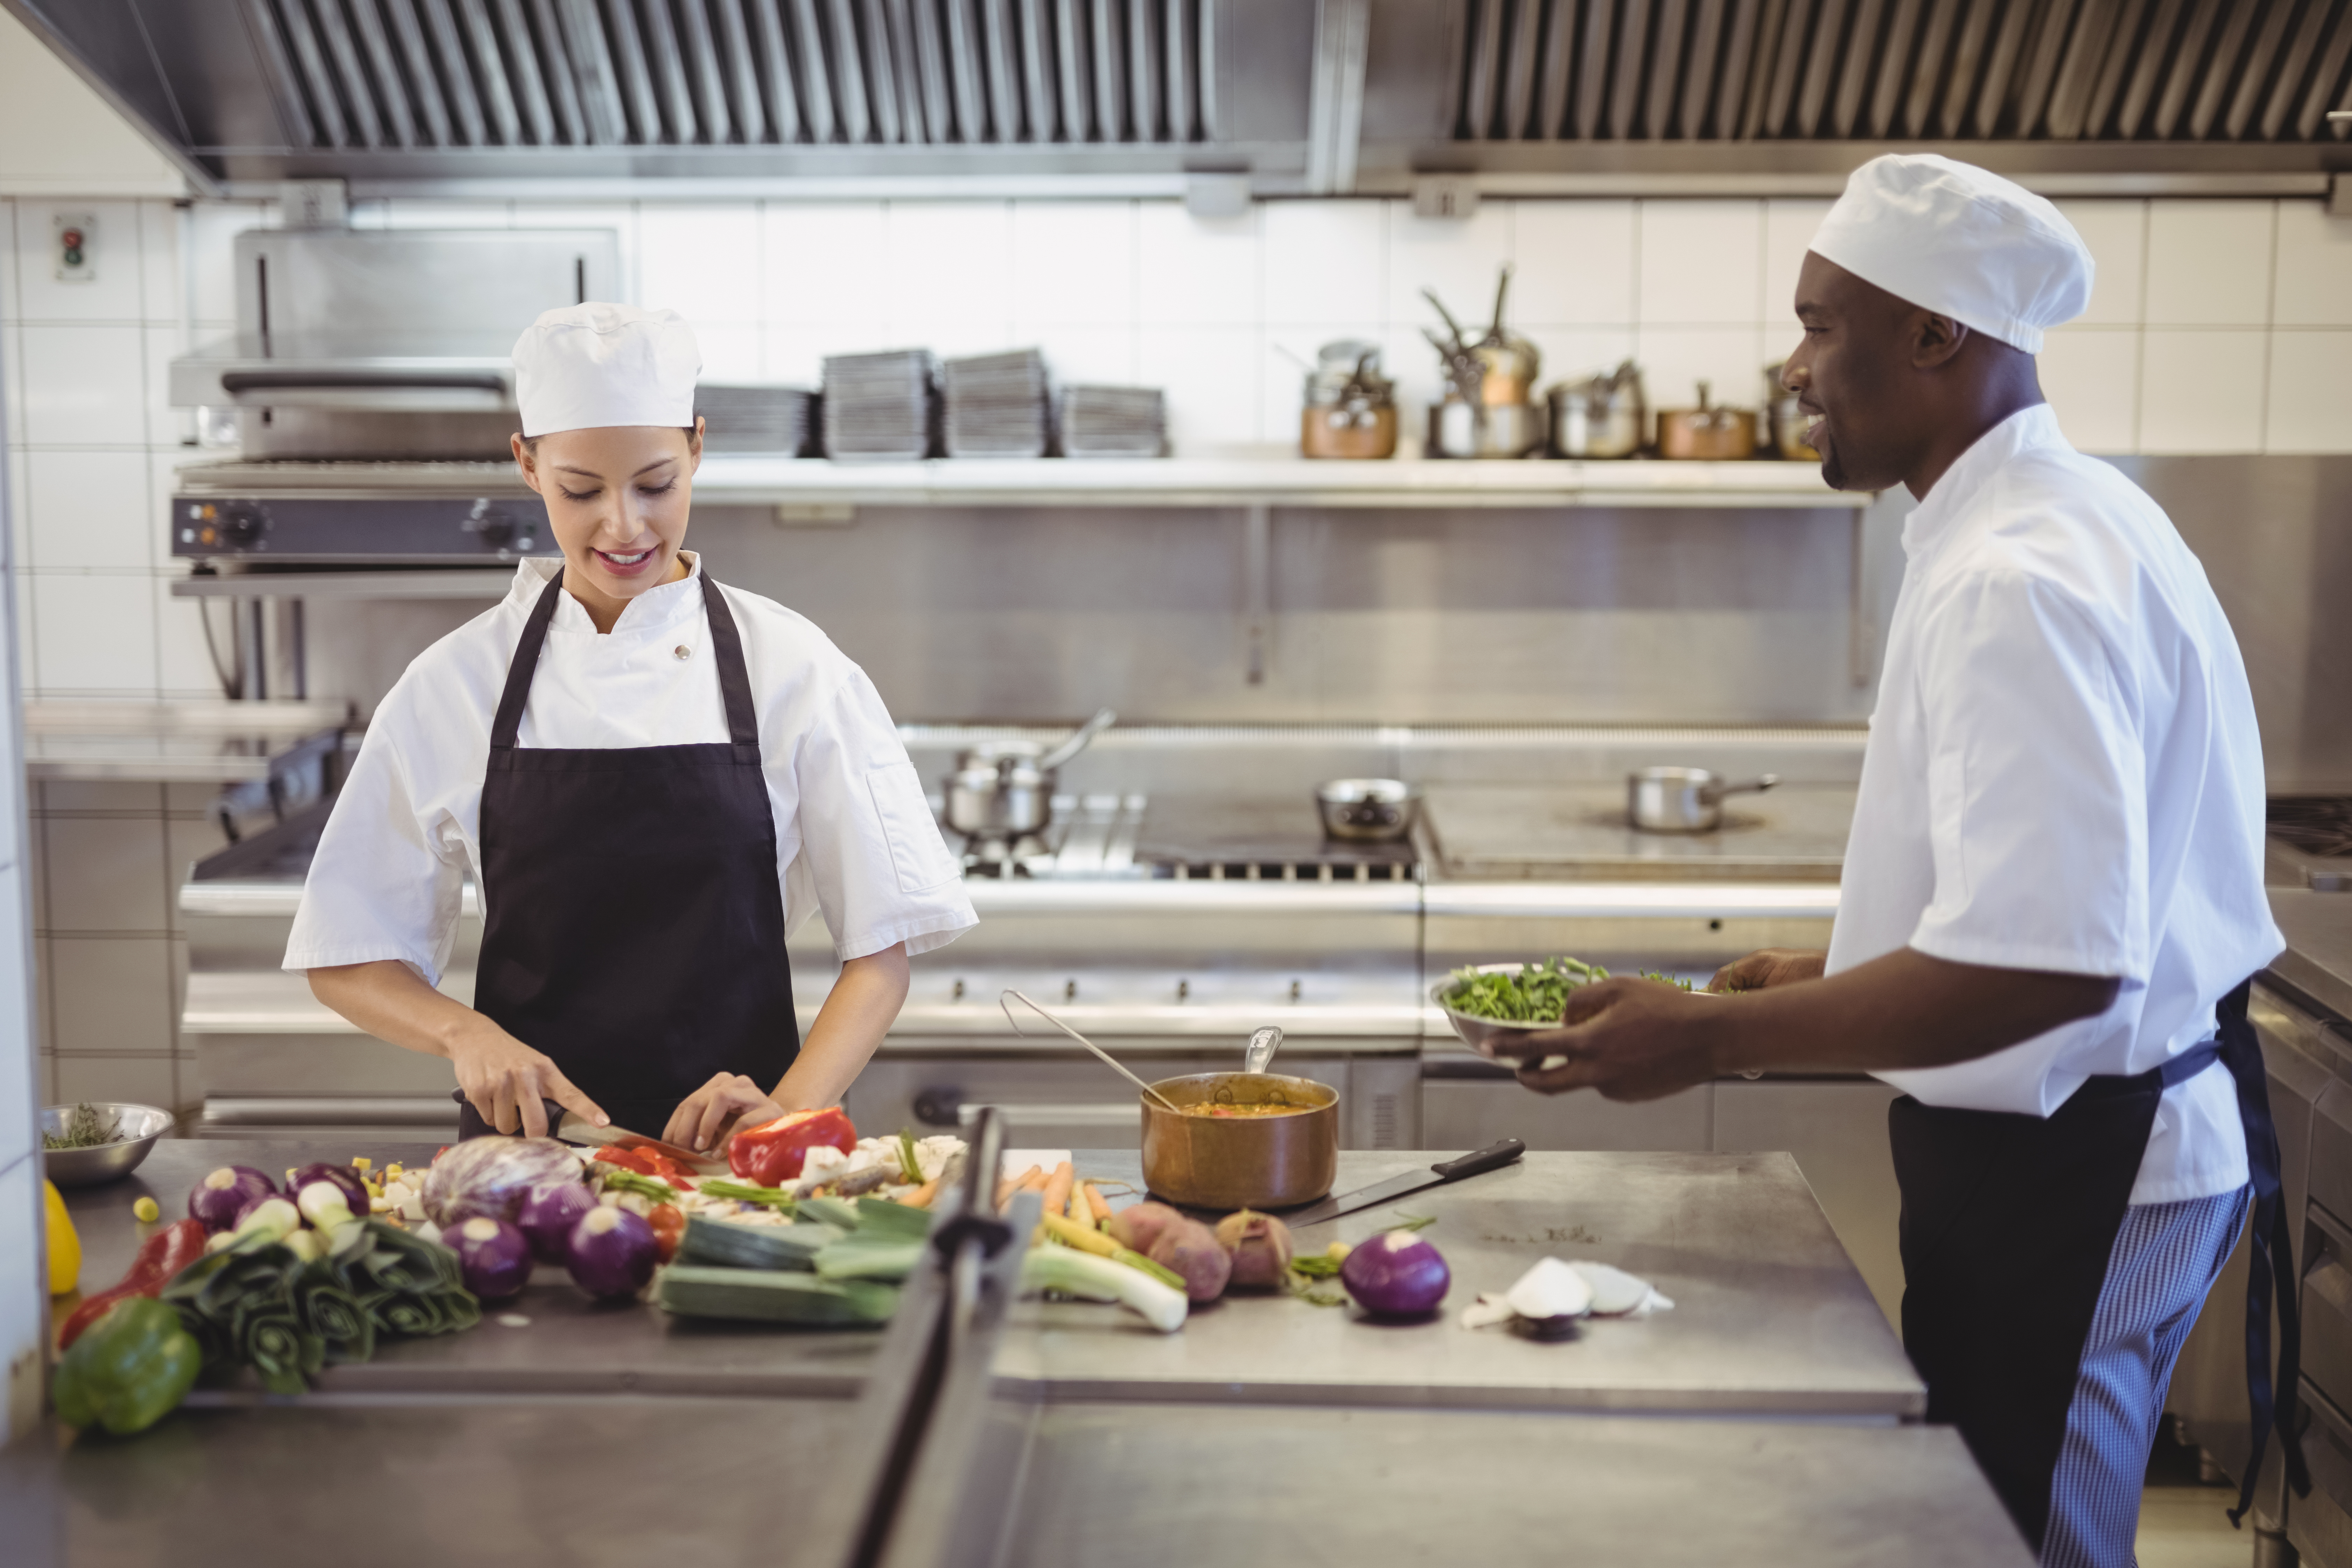 Maintain Labor Law Compliance with a Restaurant Management Platform